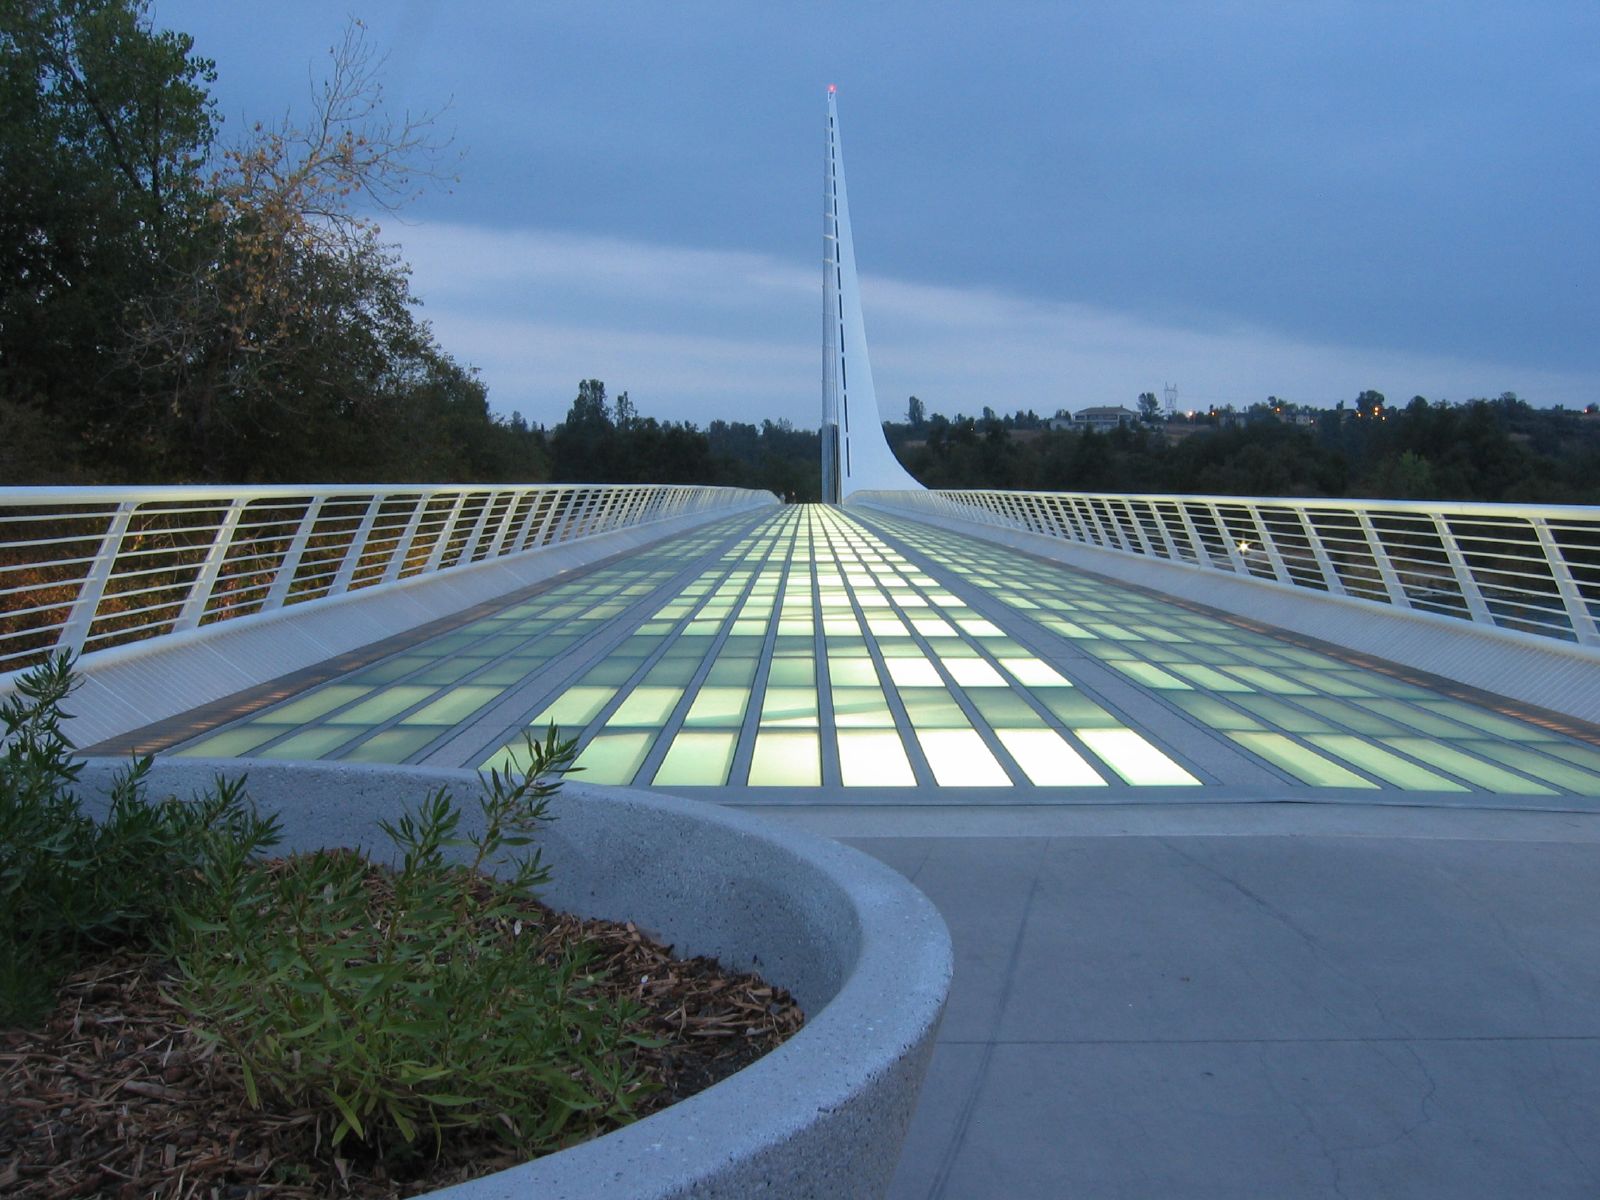 Cantilever bridge - Simple English Wikipedia, the free